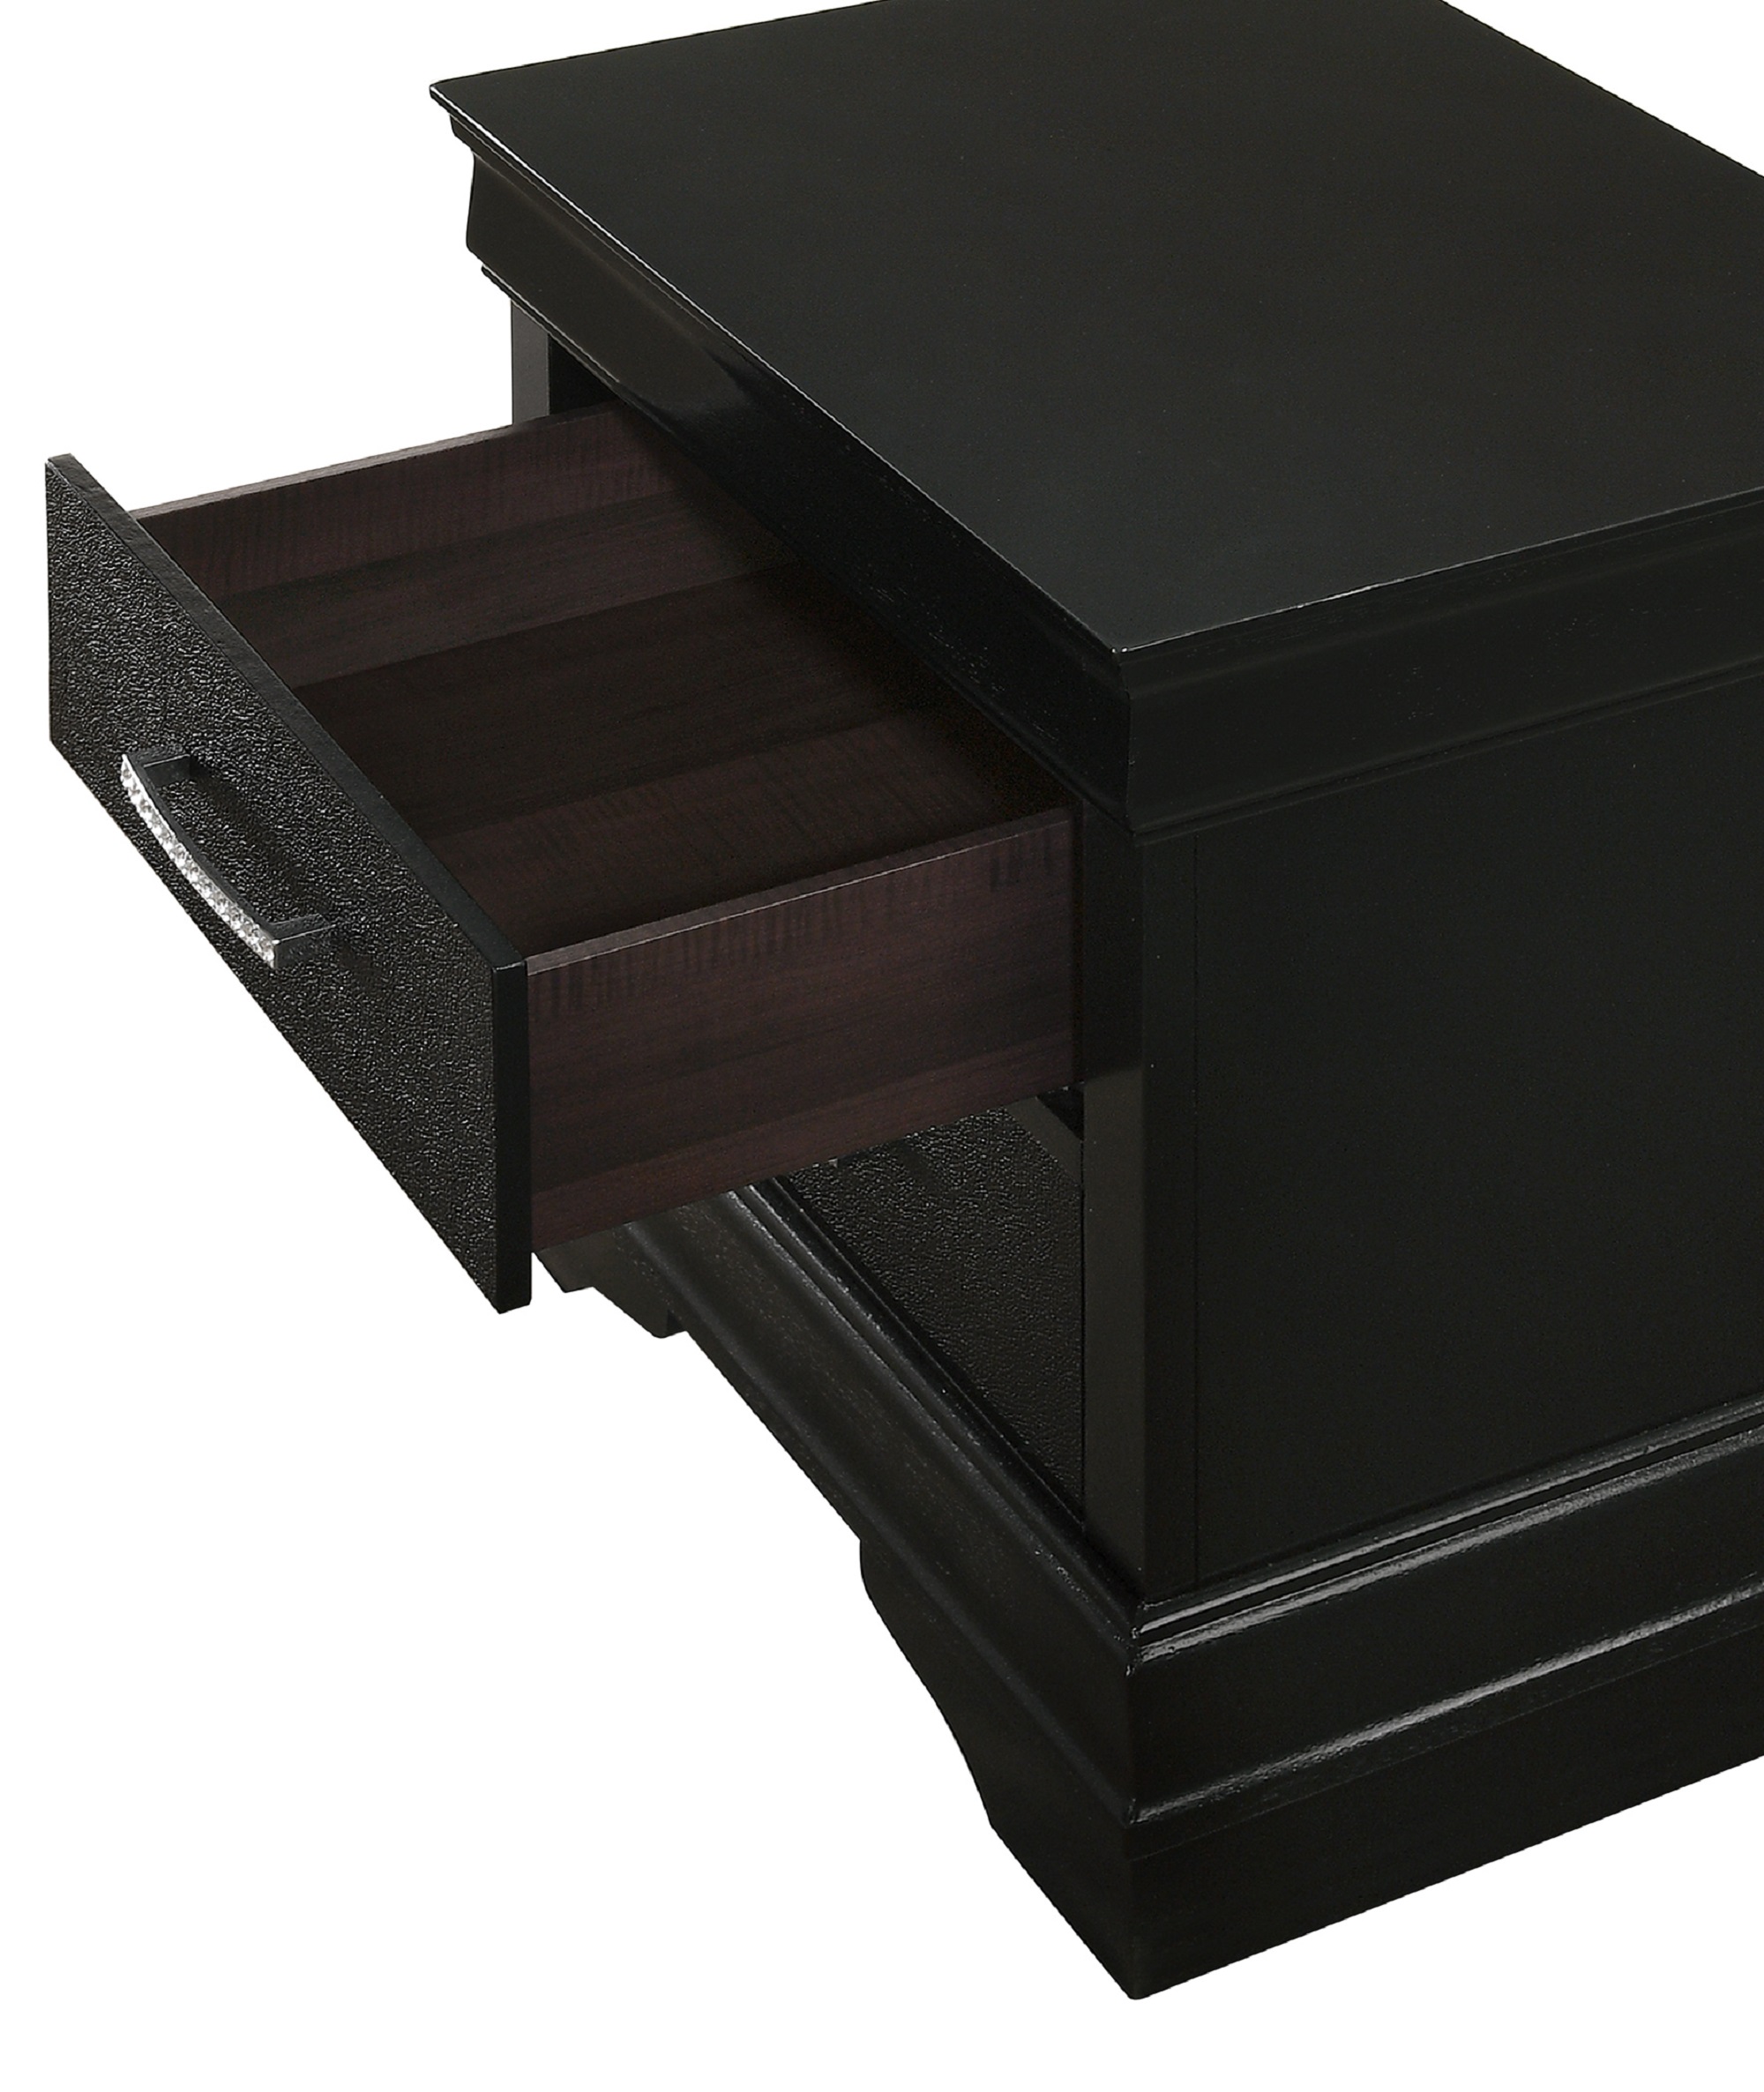 Modern 5pc Full Size Black Finish Upholstered Bed Set Solid Wood Storage Wooden Bedroom Furniture - image 5 of 7